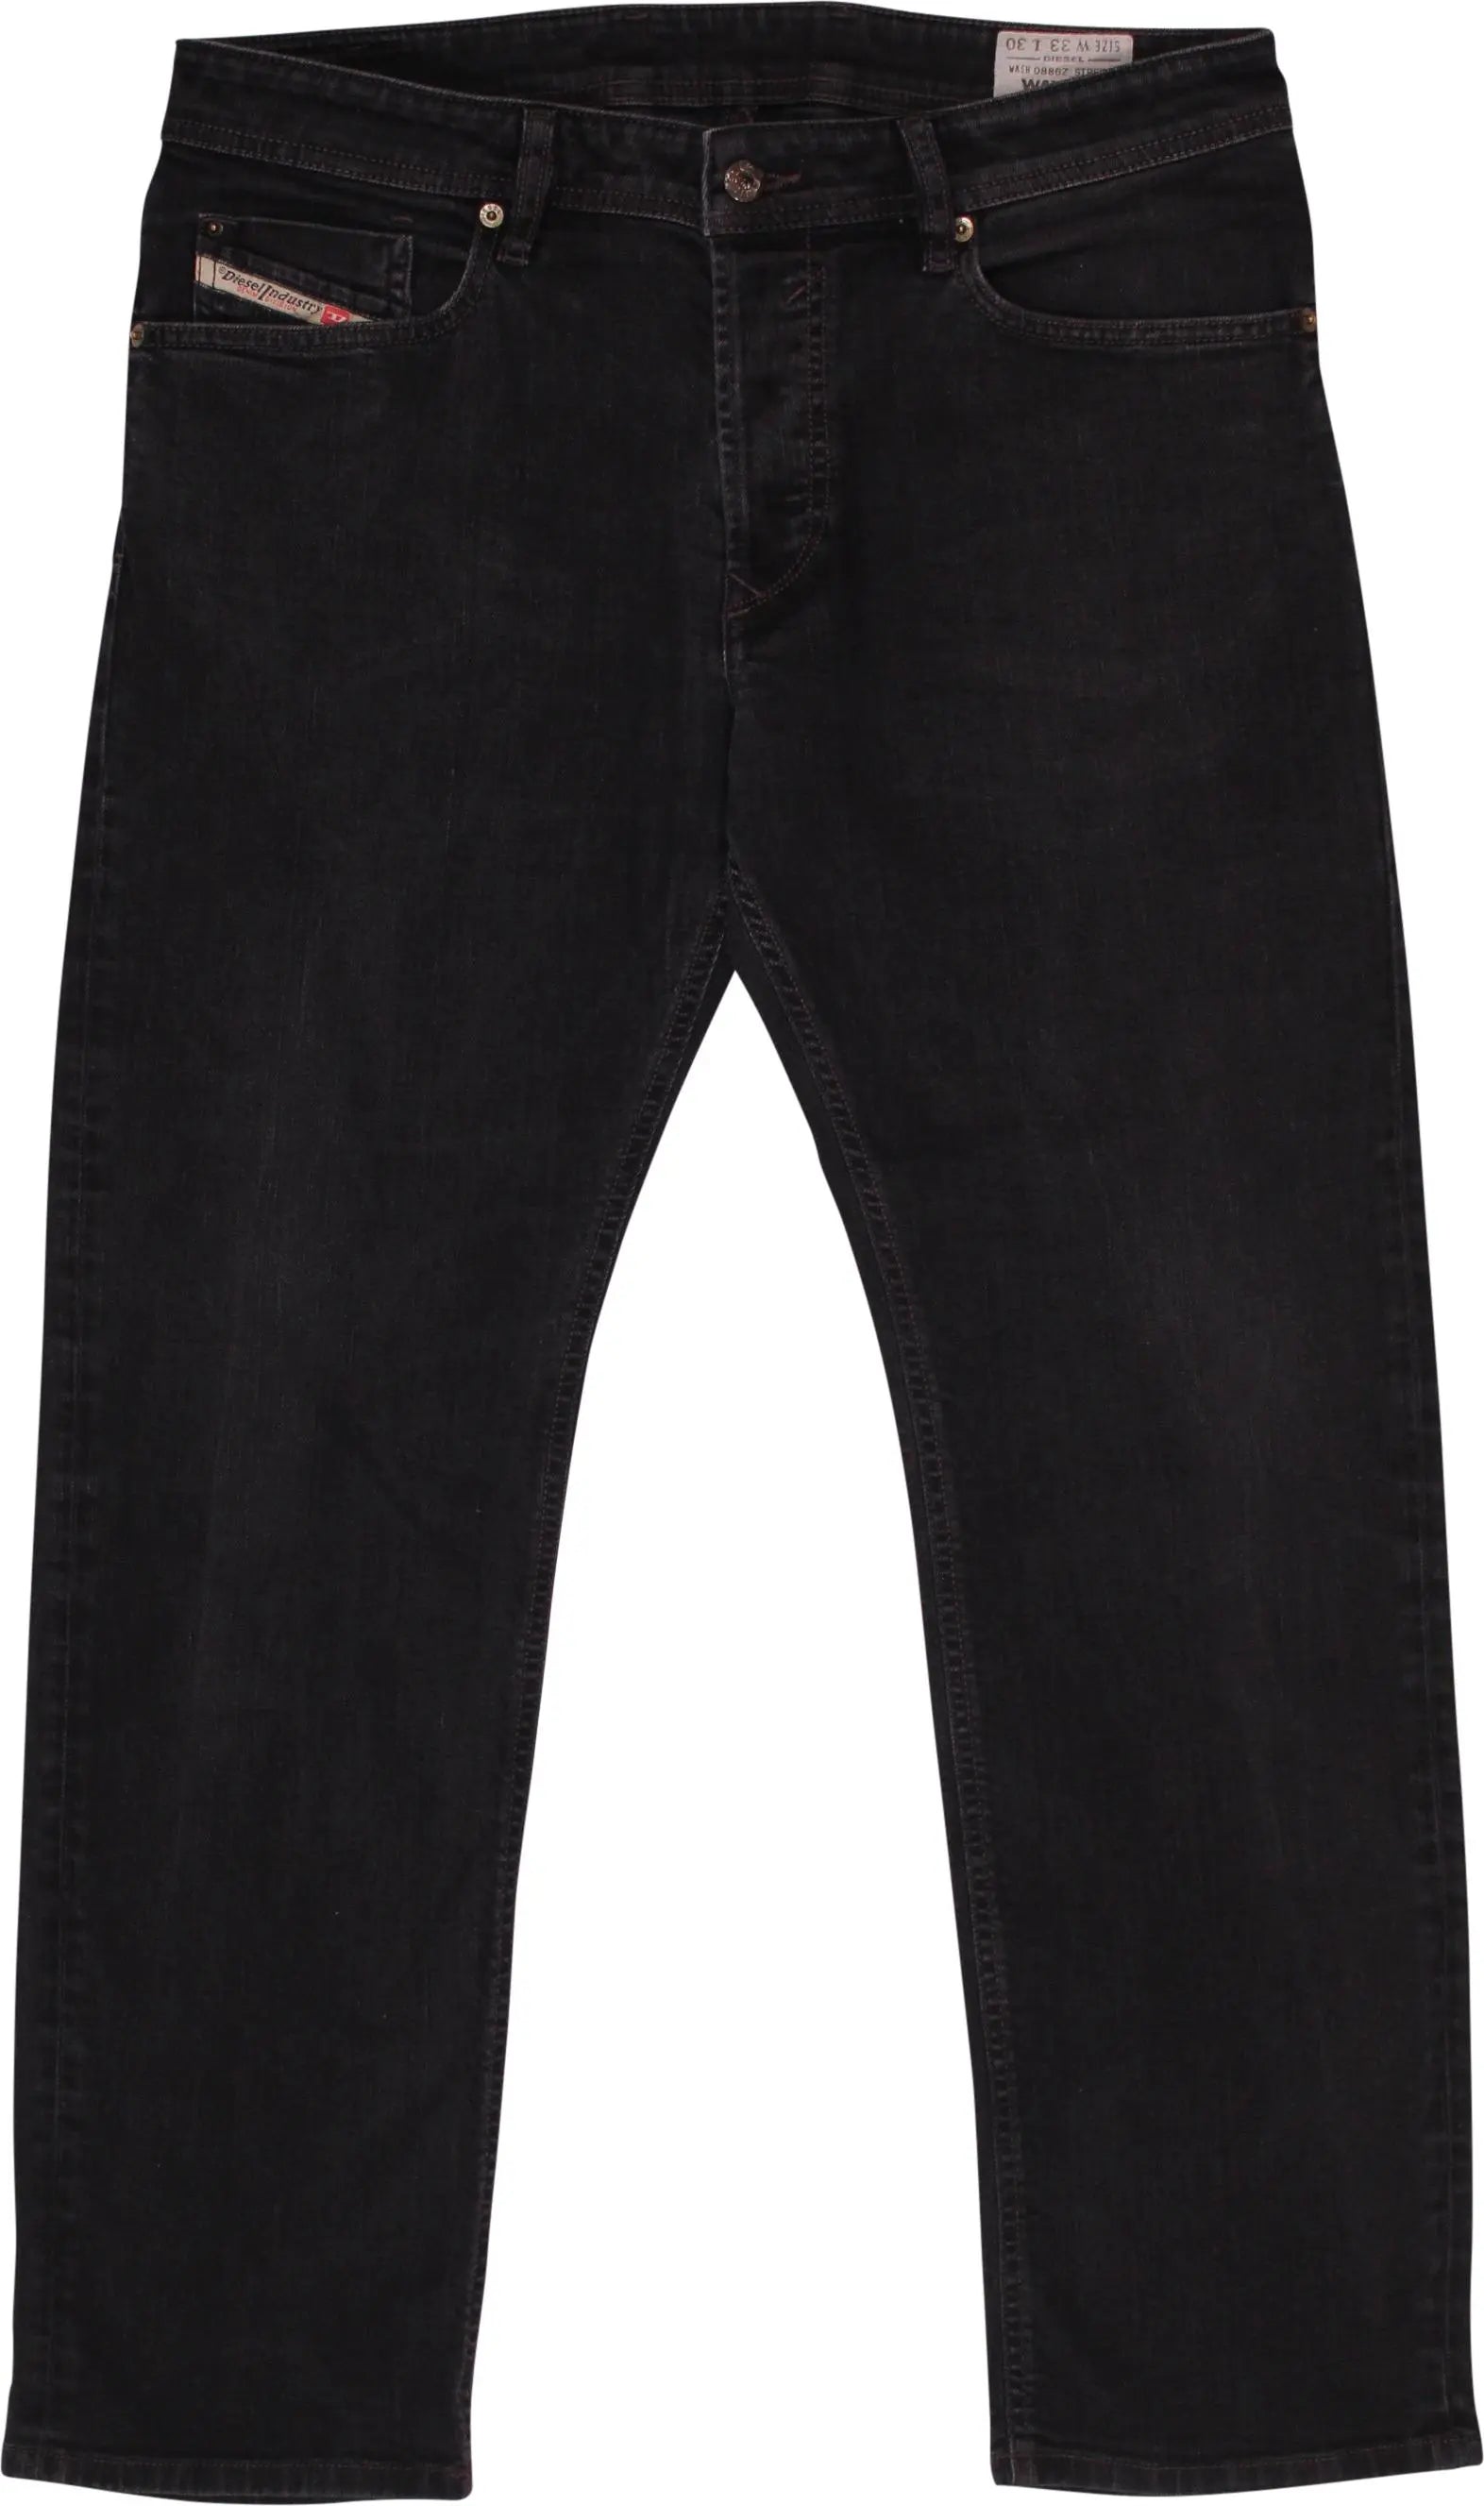 Diesel - Waykee Regular Jeans by Diesel- ThriftTale.com - Vintage and second handclothing